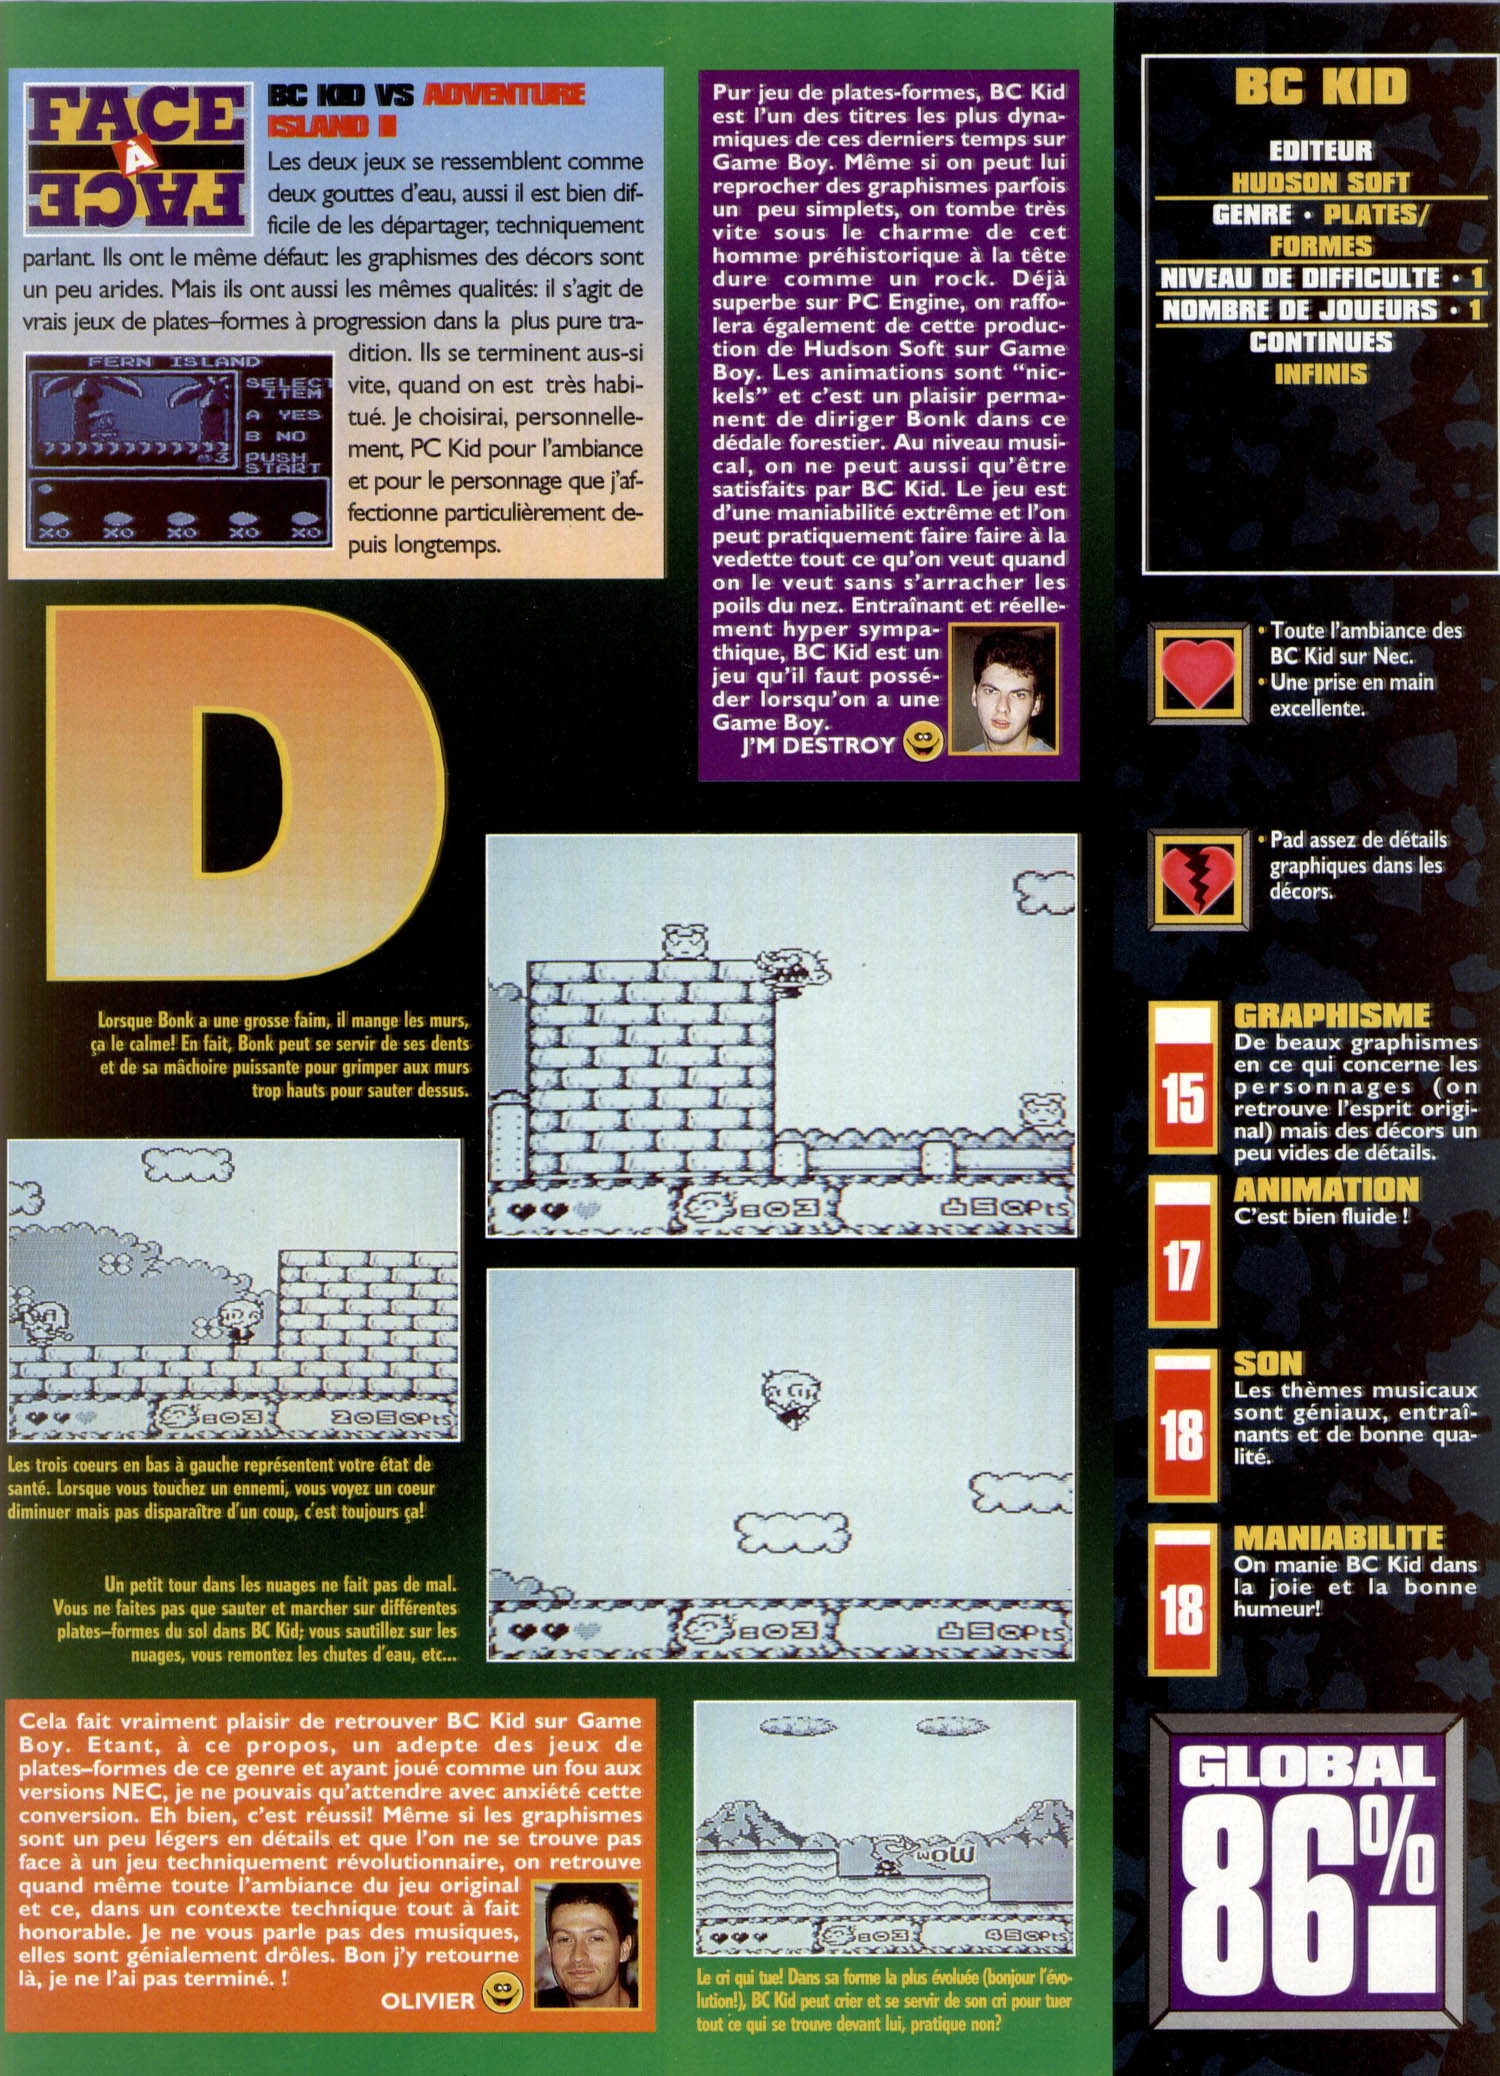 tests//804/Joypad 018 - Page 123 (1993-03).jpg